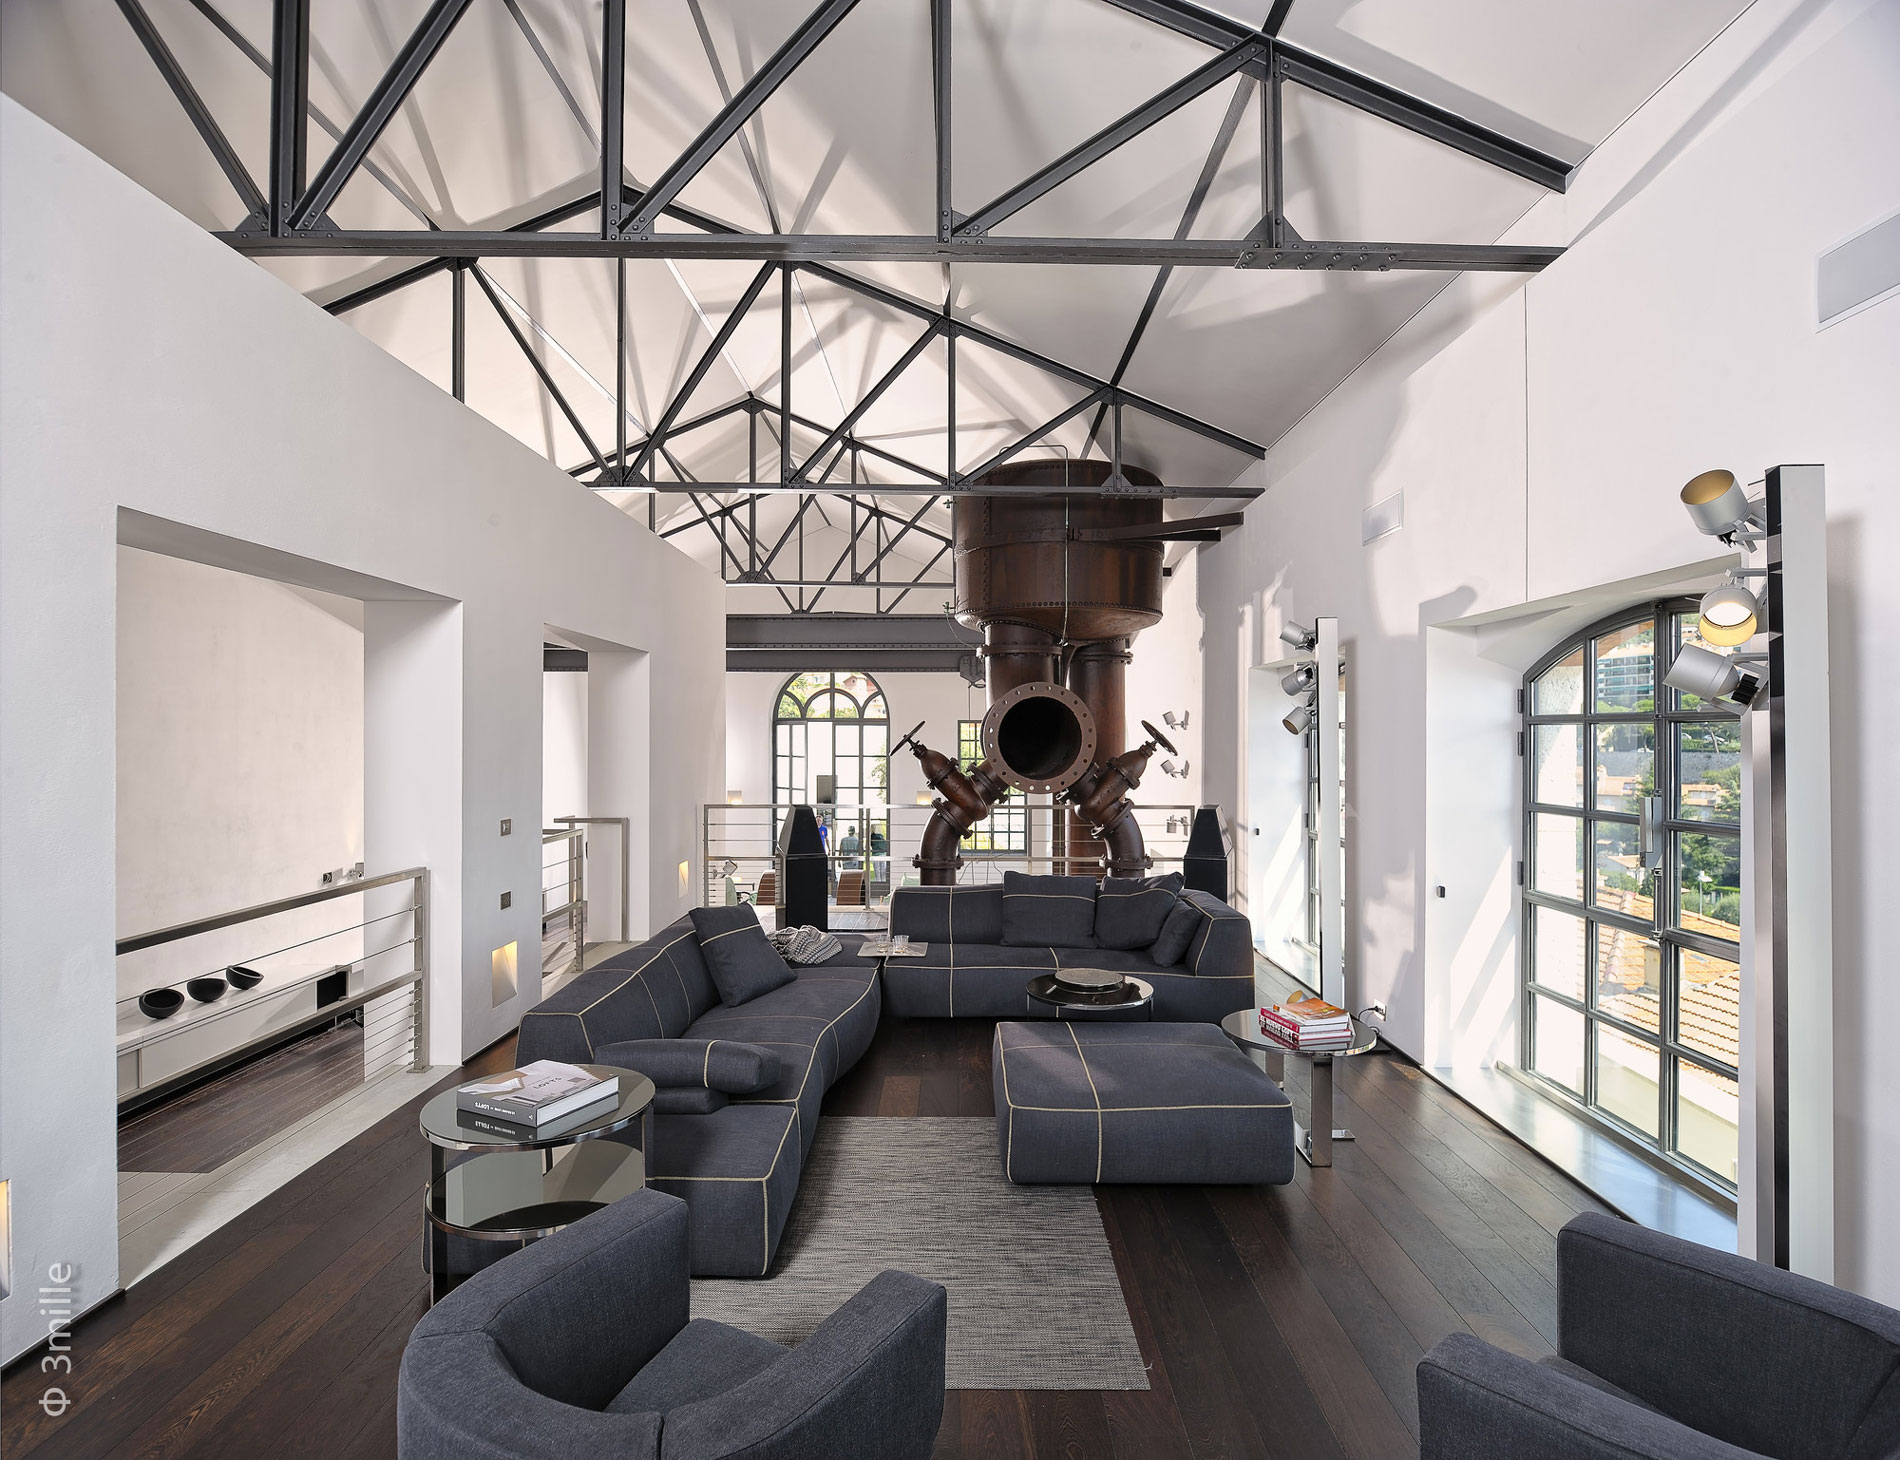 70 Moderne Innovative Luxus Interieur Ideen Furs Wohnzimmer